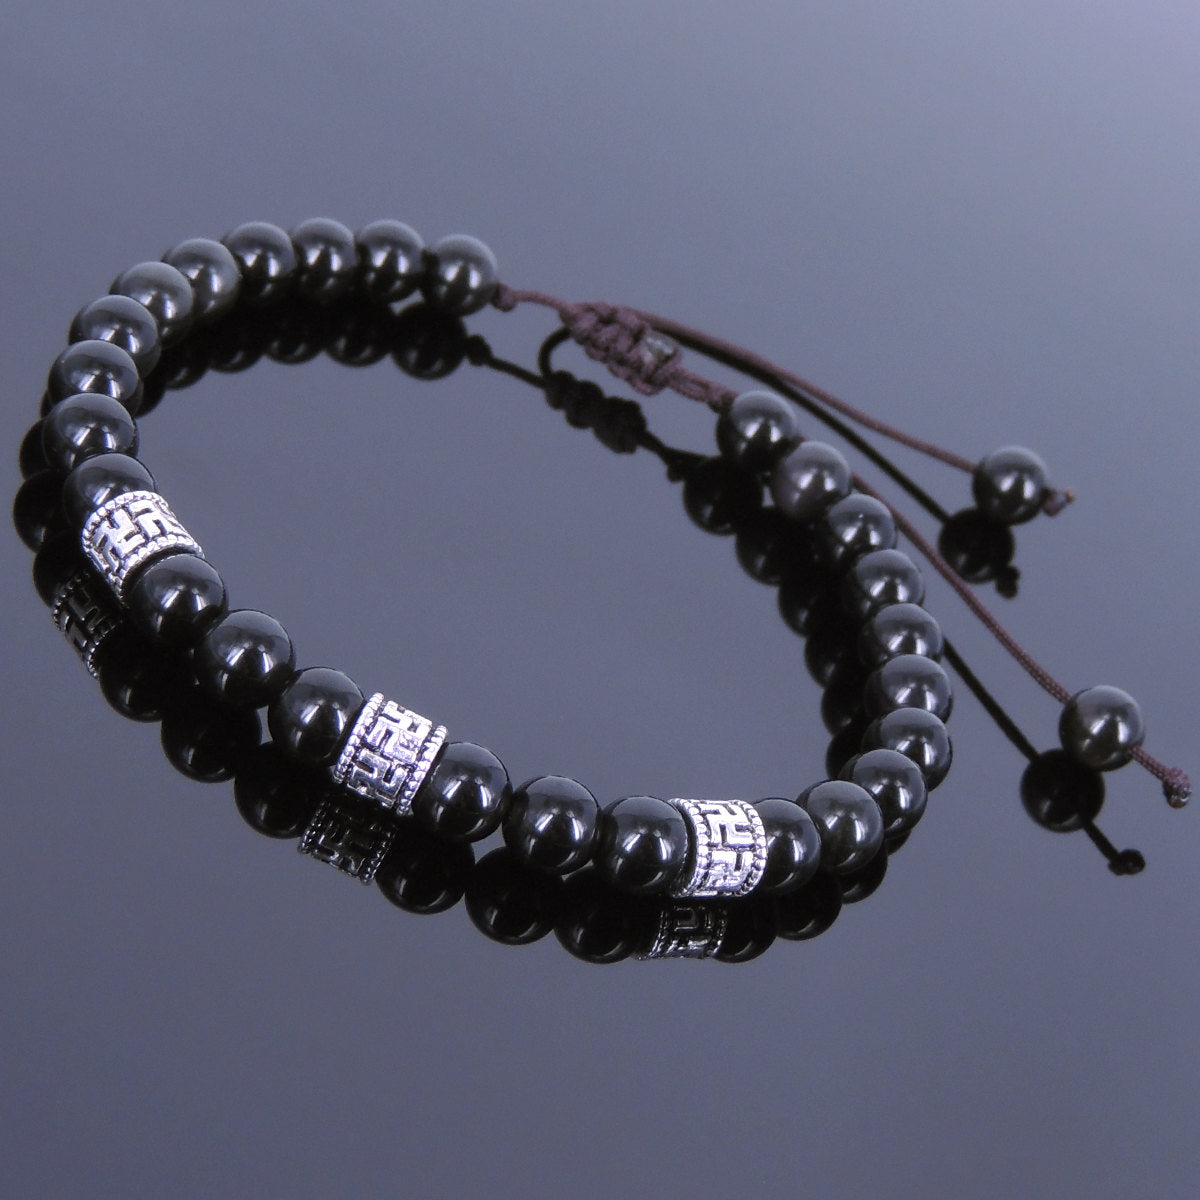 6mm Rainbow Black Obsidian Adjustable Braided Bracelet with Tibetan Silver Buddhist Protection Beads - Handmade by Gem & Silver TSB105